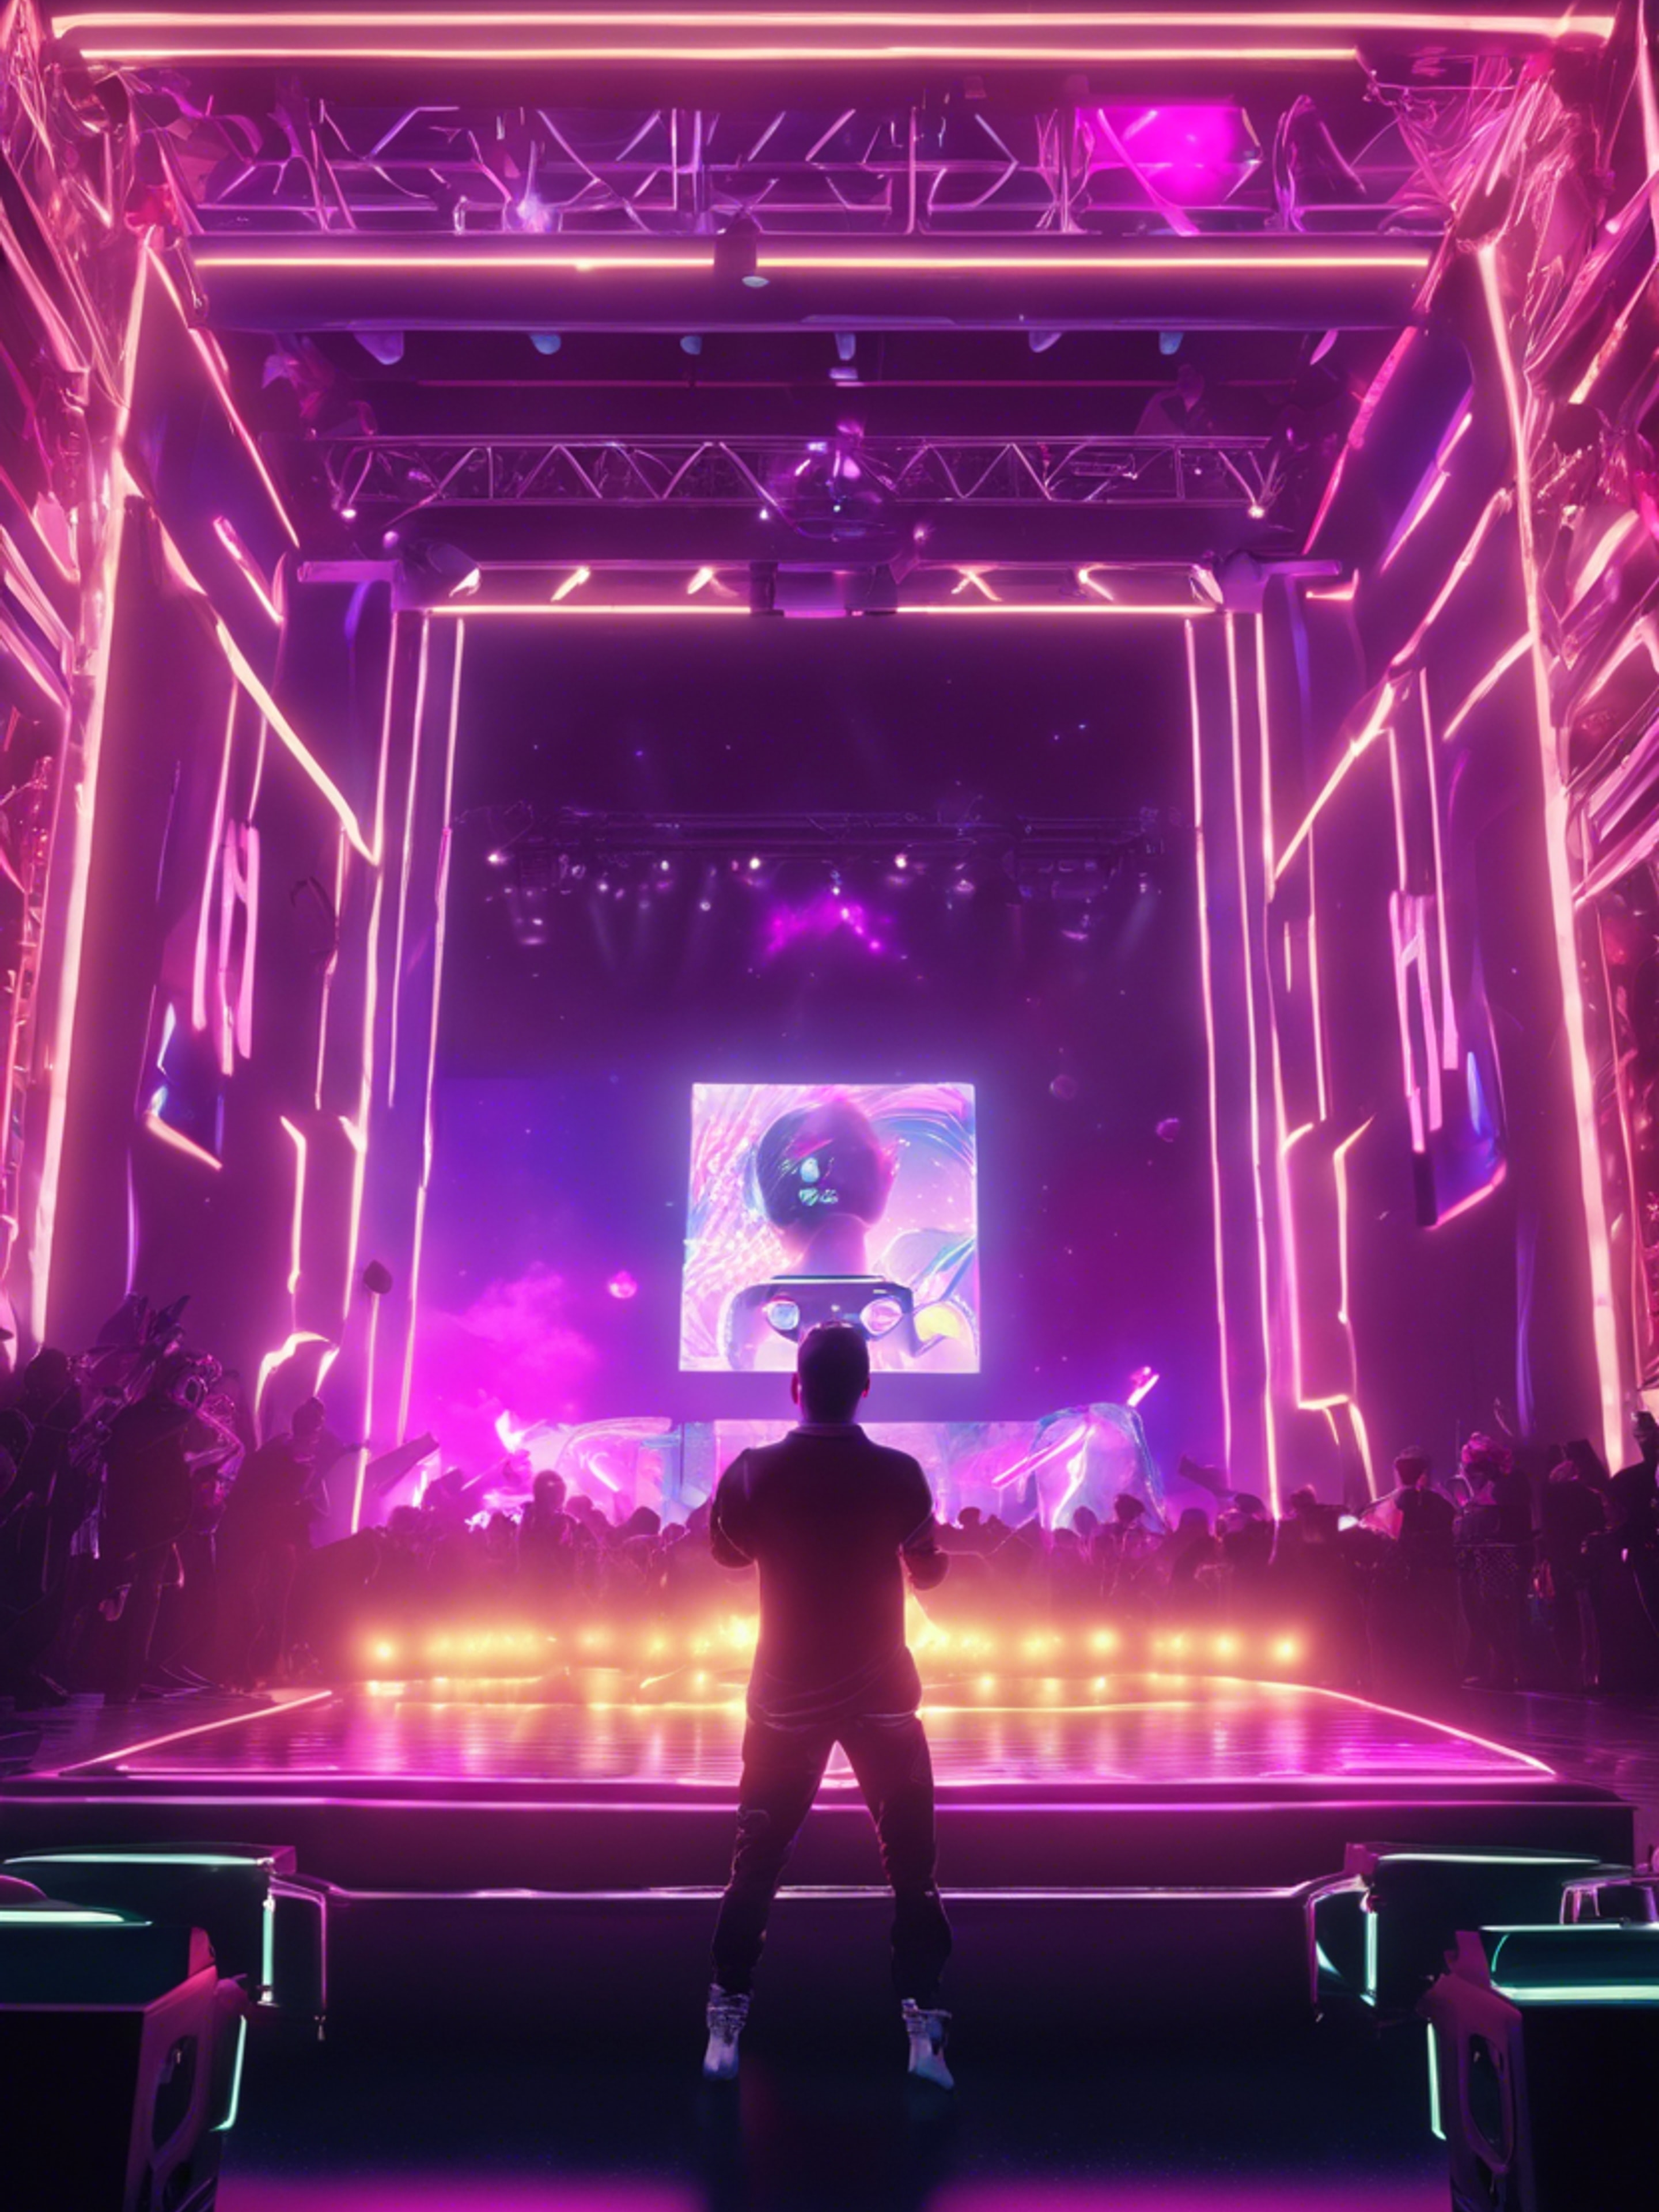 A virtual concert in a Y2K gaming environment, with neon spotlights showcasing a digital avatar performing onstage. Divar kağızı[570c0802add746f5a0b1]